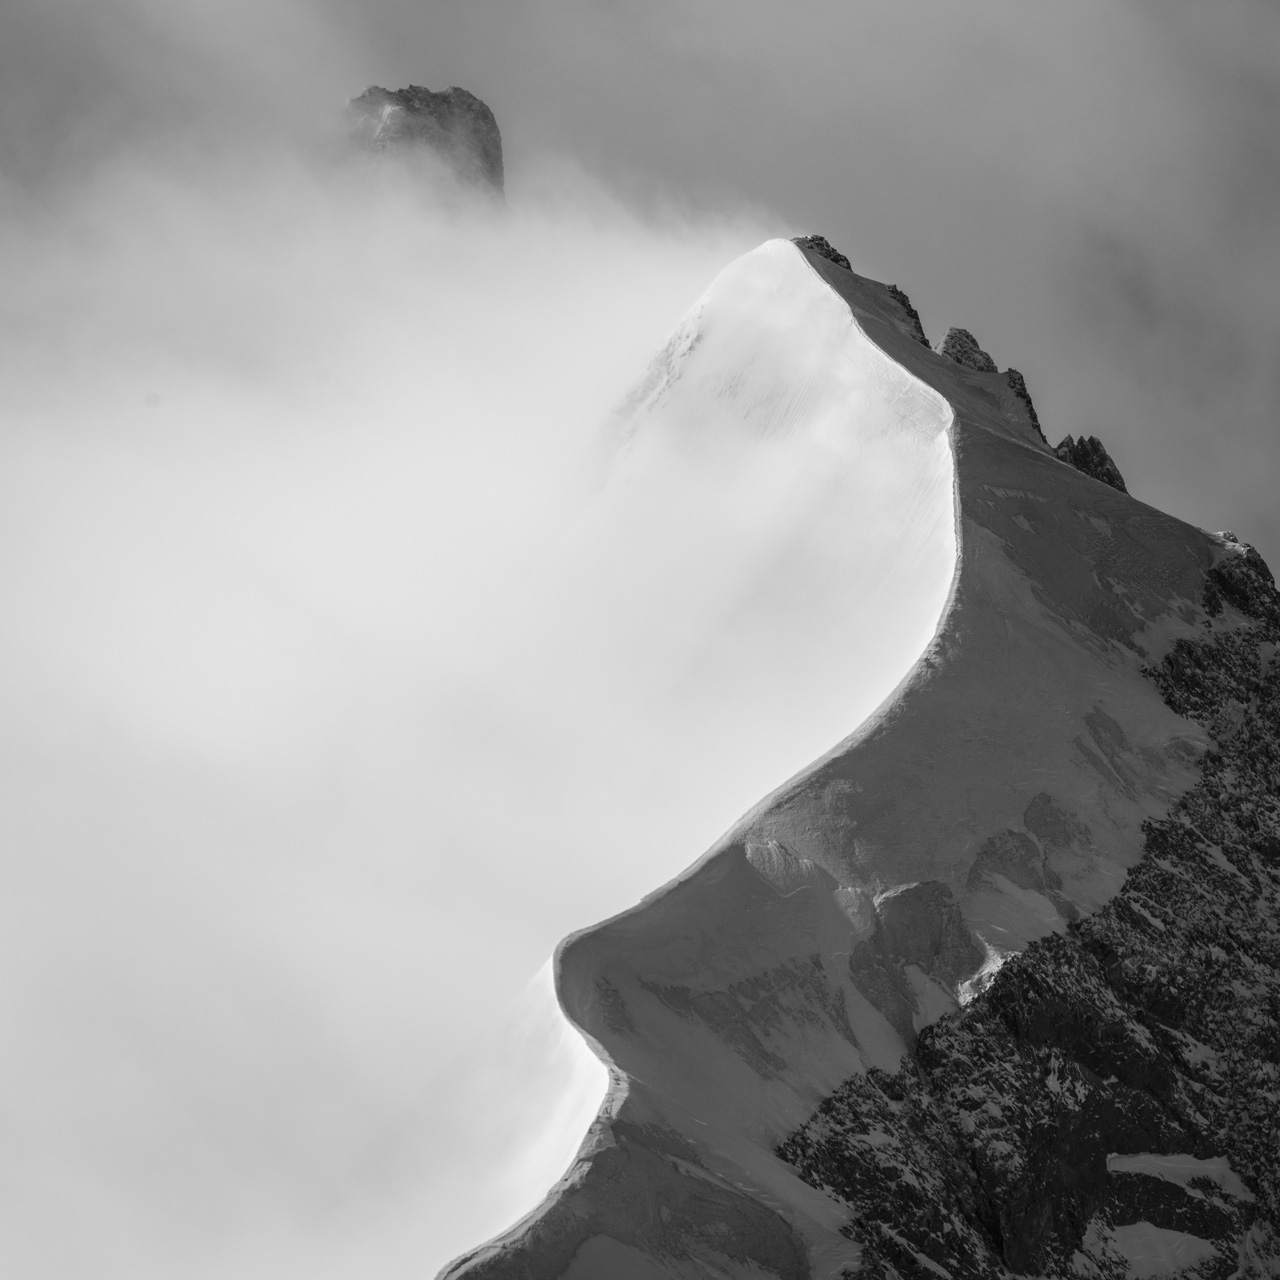 Montagne St Moritz photos noir et blanc - Pizzo Bianco - Bernina